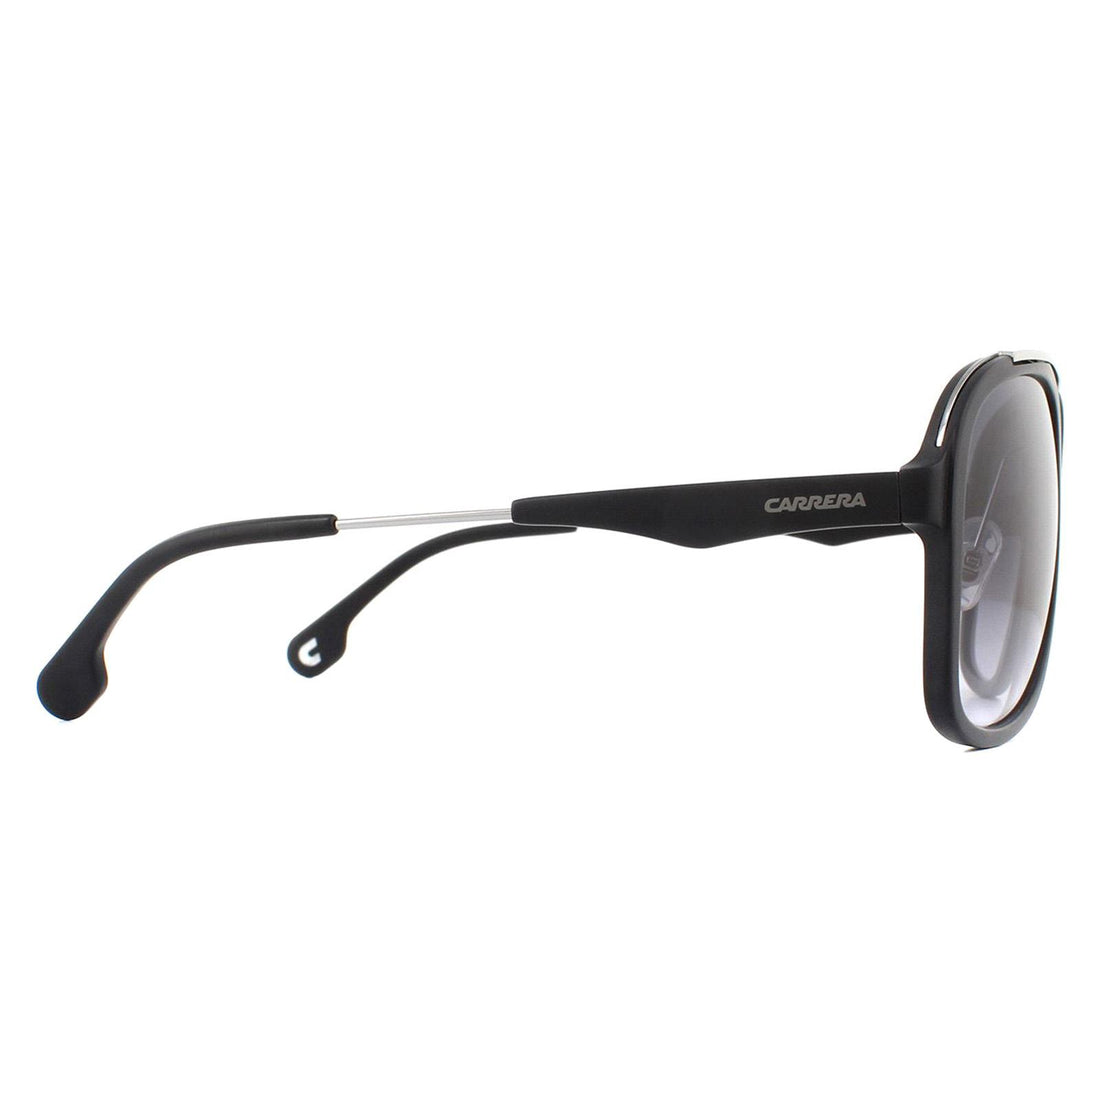 Carrera Sunglasses 133/S TI7 9O Ruthenium Matte Black Dark Grey Gradient